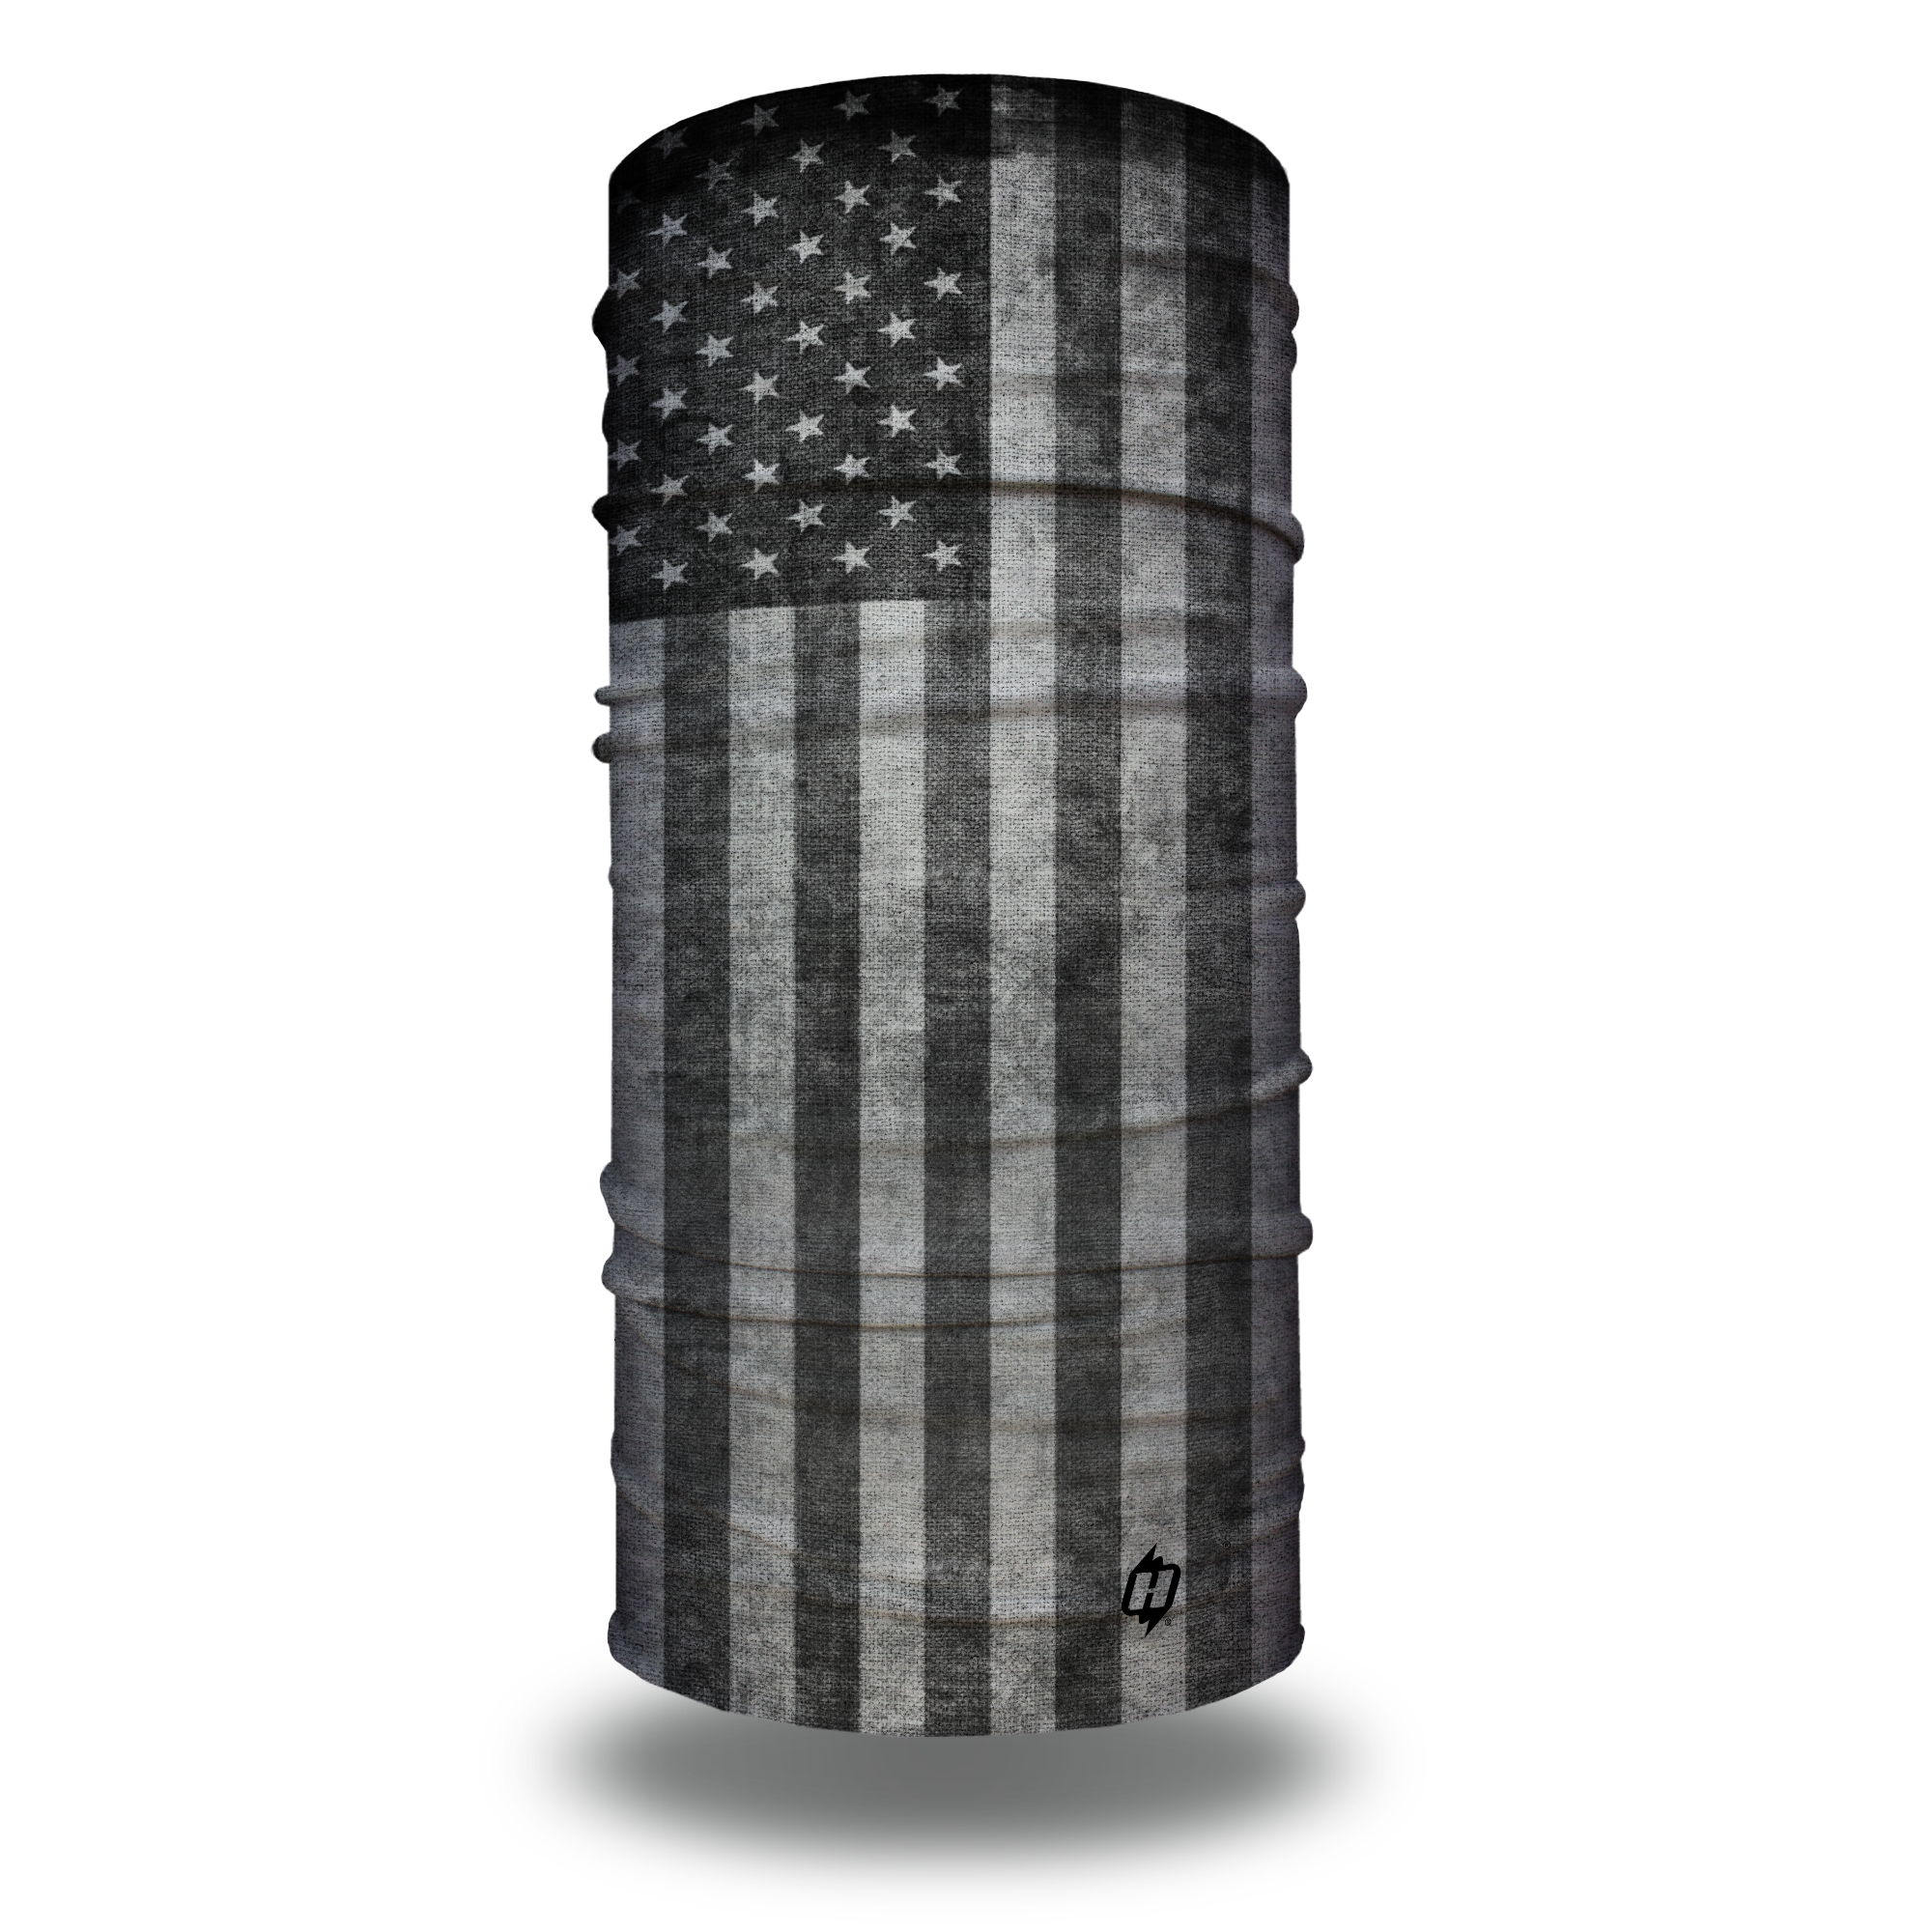 USA Flag 'Merica Seamless UPF 30 High Performance Moisture Wicking Bandana Made of 100% Polyester Microfiber by Hoo-rag